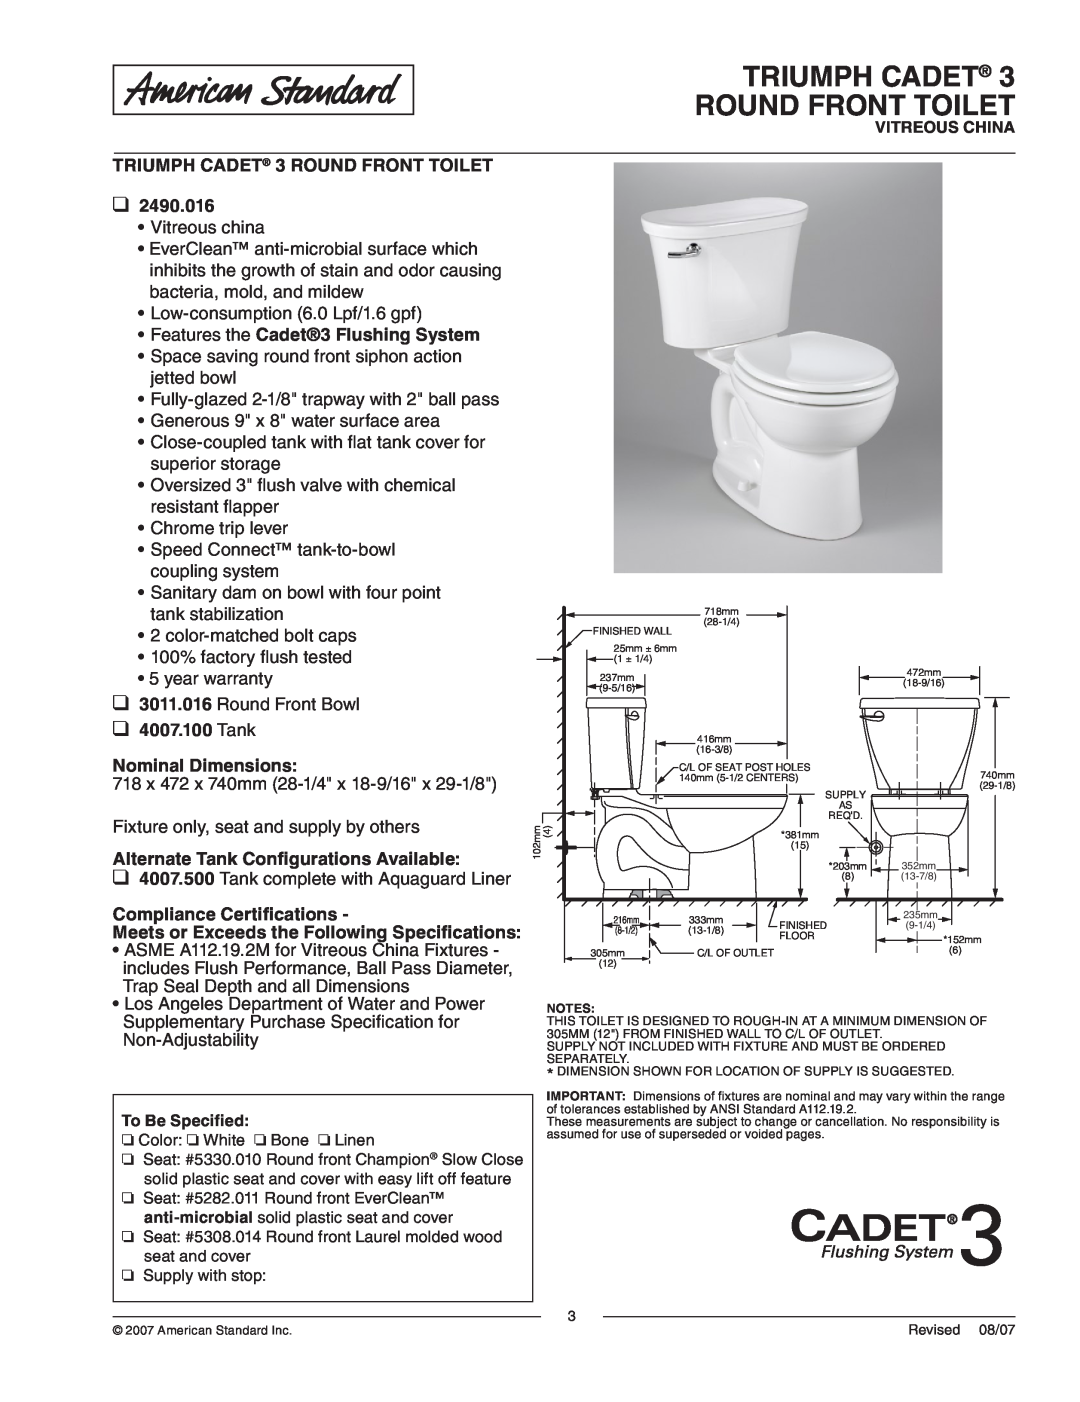 American Standard 2490.016 dimensions Triumph Cadet Round Front Toilet, TRIUMPH CADET 3 ROUND FRONT TOILET 